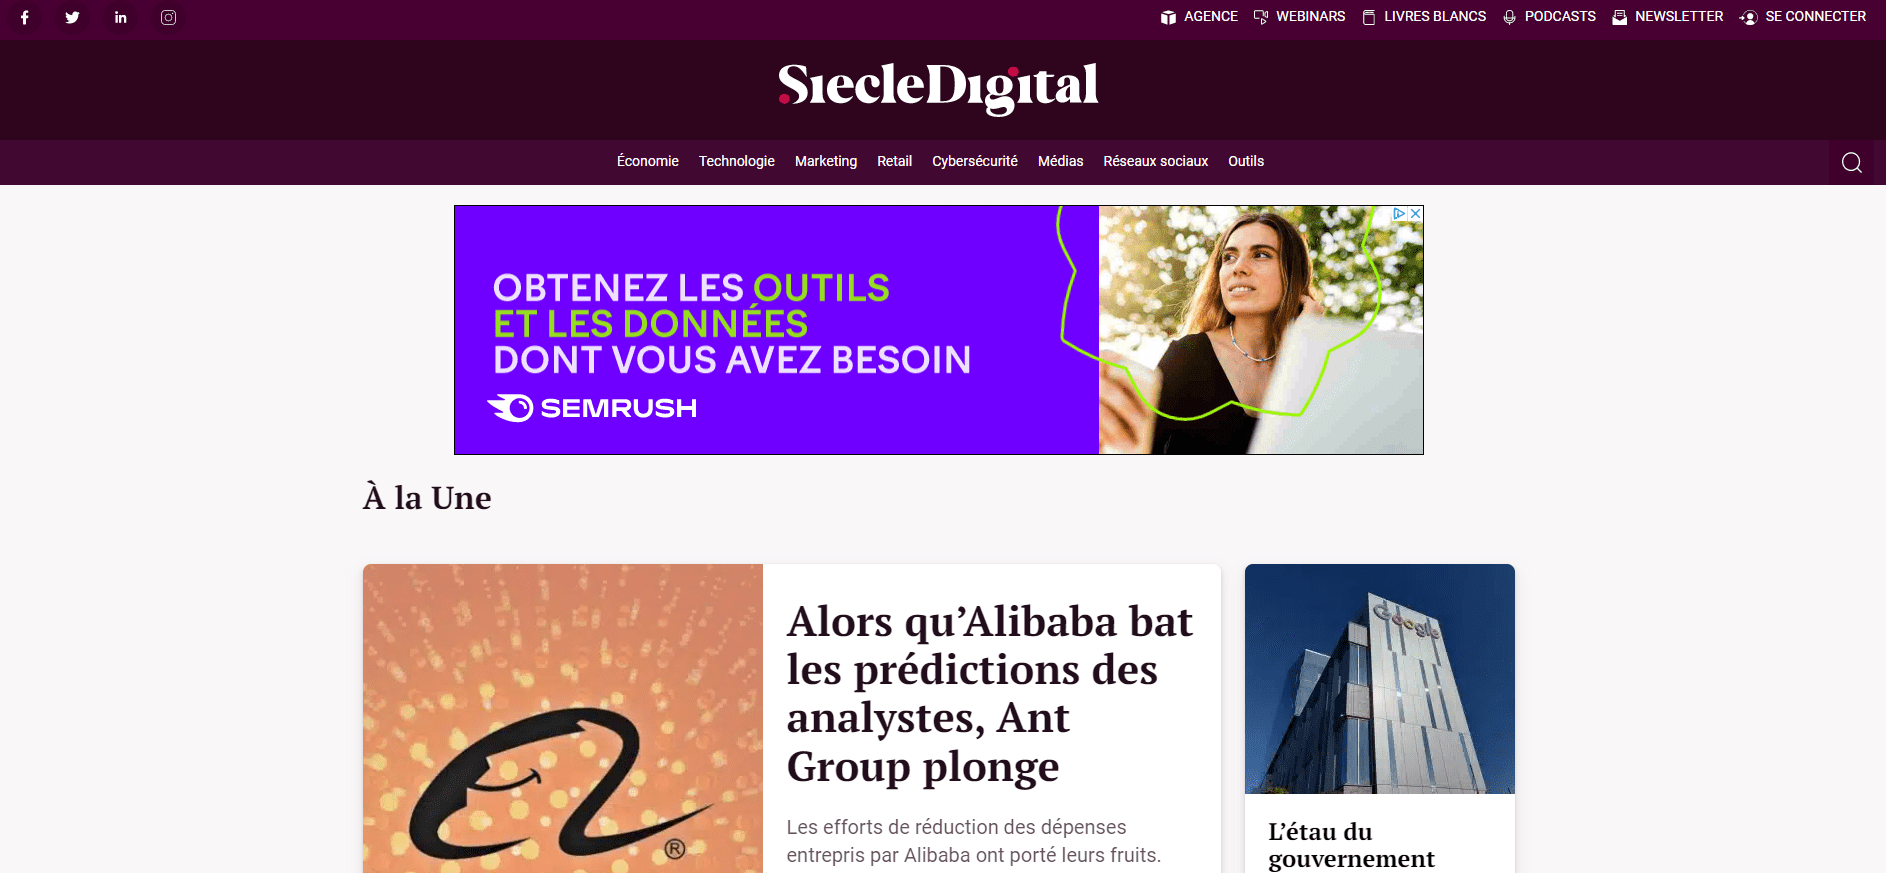 Siecle digital - Le journal Du Marketing